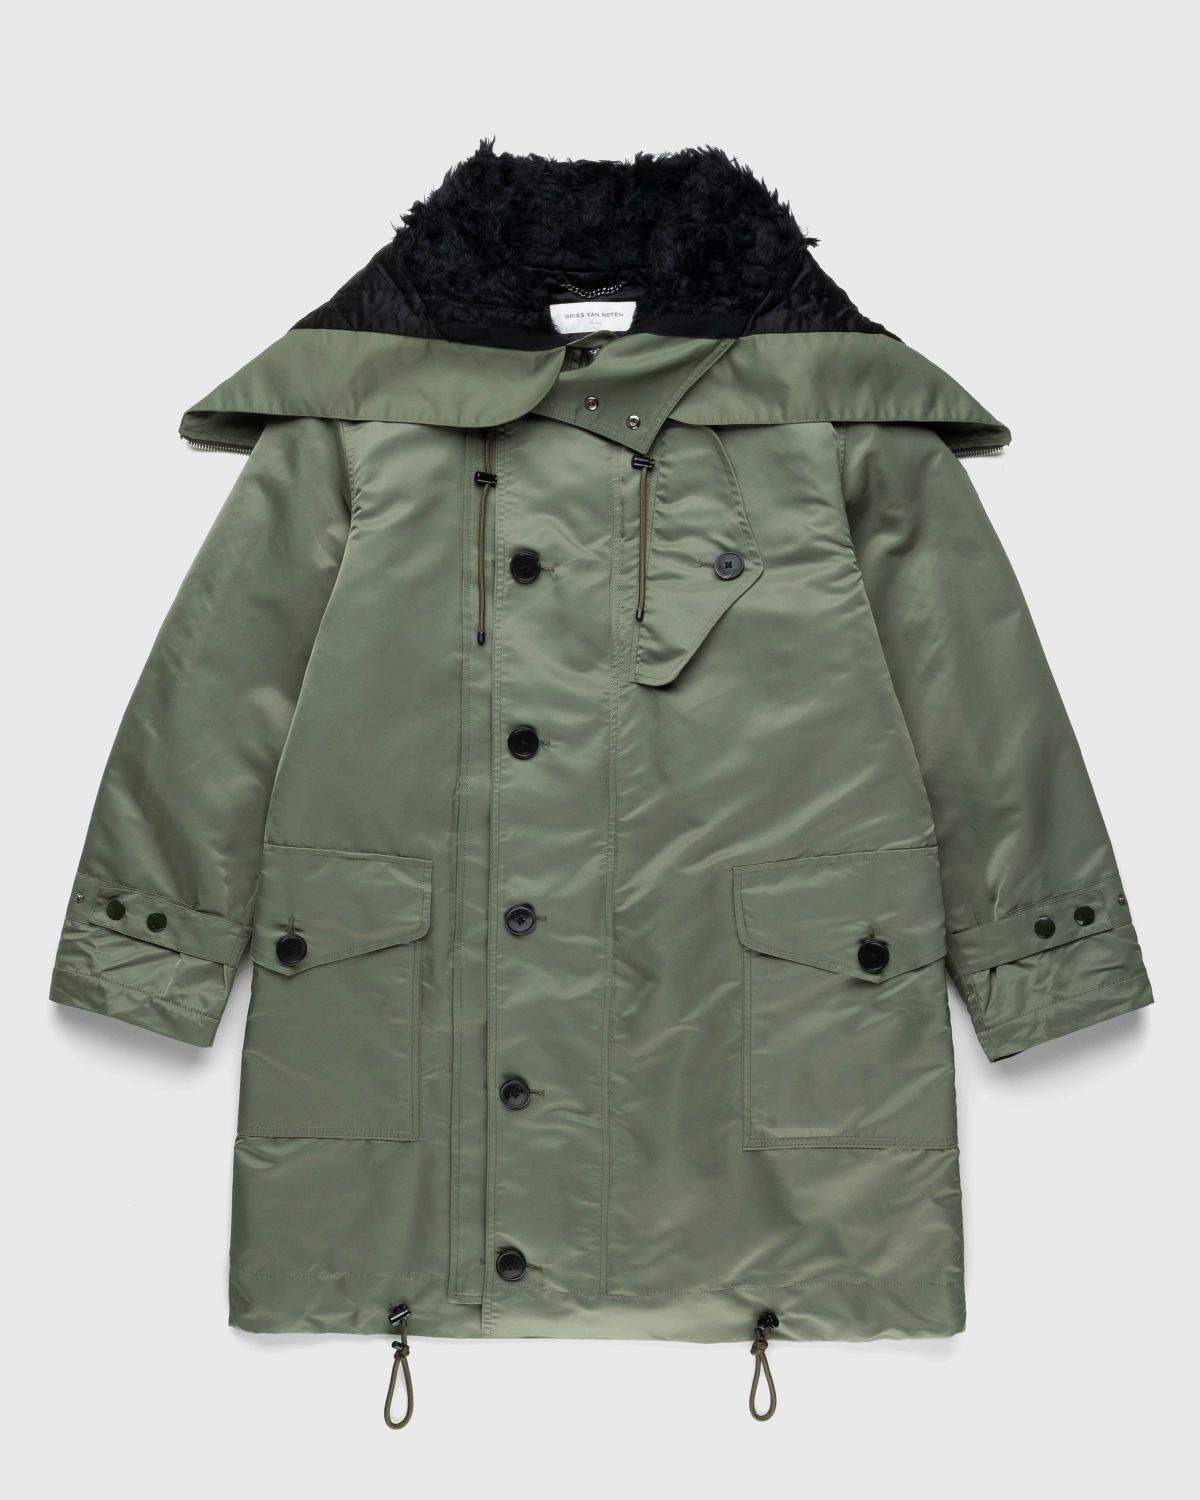 Dries van Noten – Verreli Jacket Khaki - Outerwear - Green - Image 1